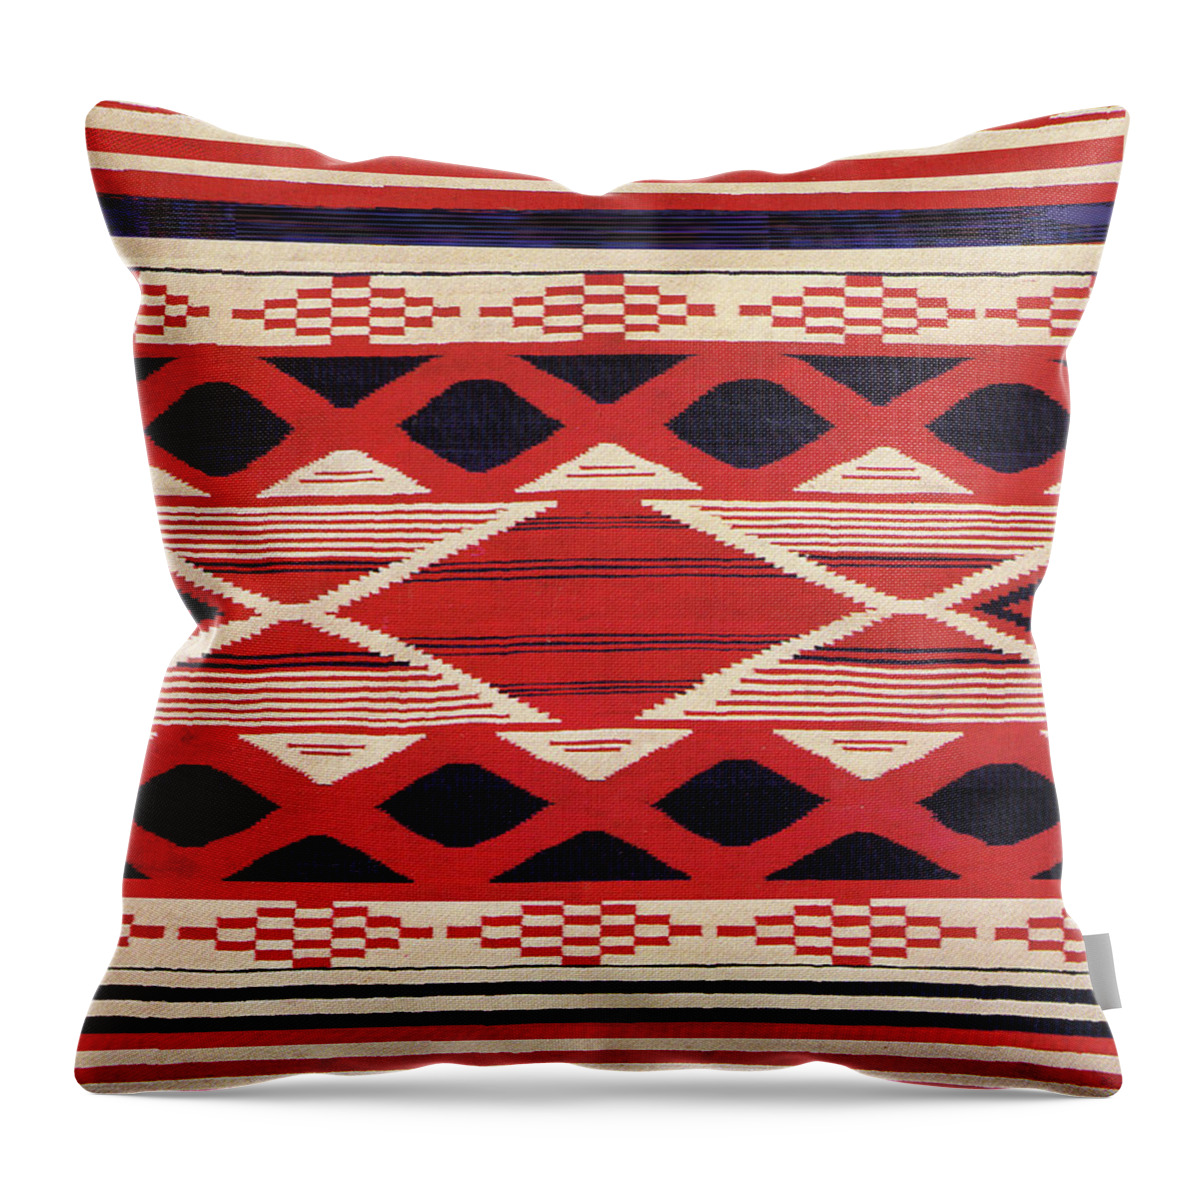 Southwest Tribal Decor Throw Pillow featuring the digital art Southwest Tribal Design by Vagabond Folk Art - Virginia Vivier